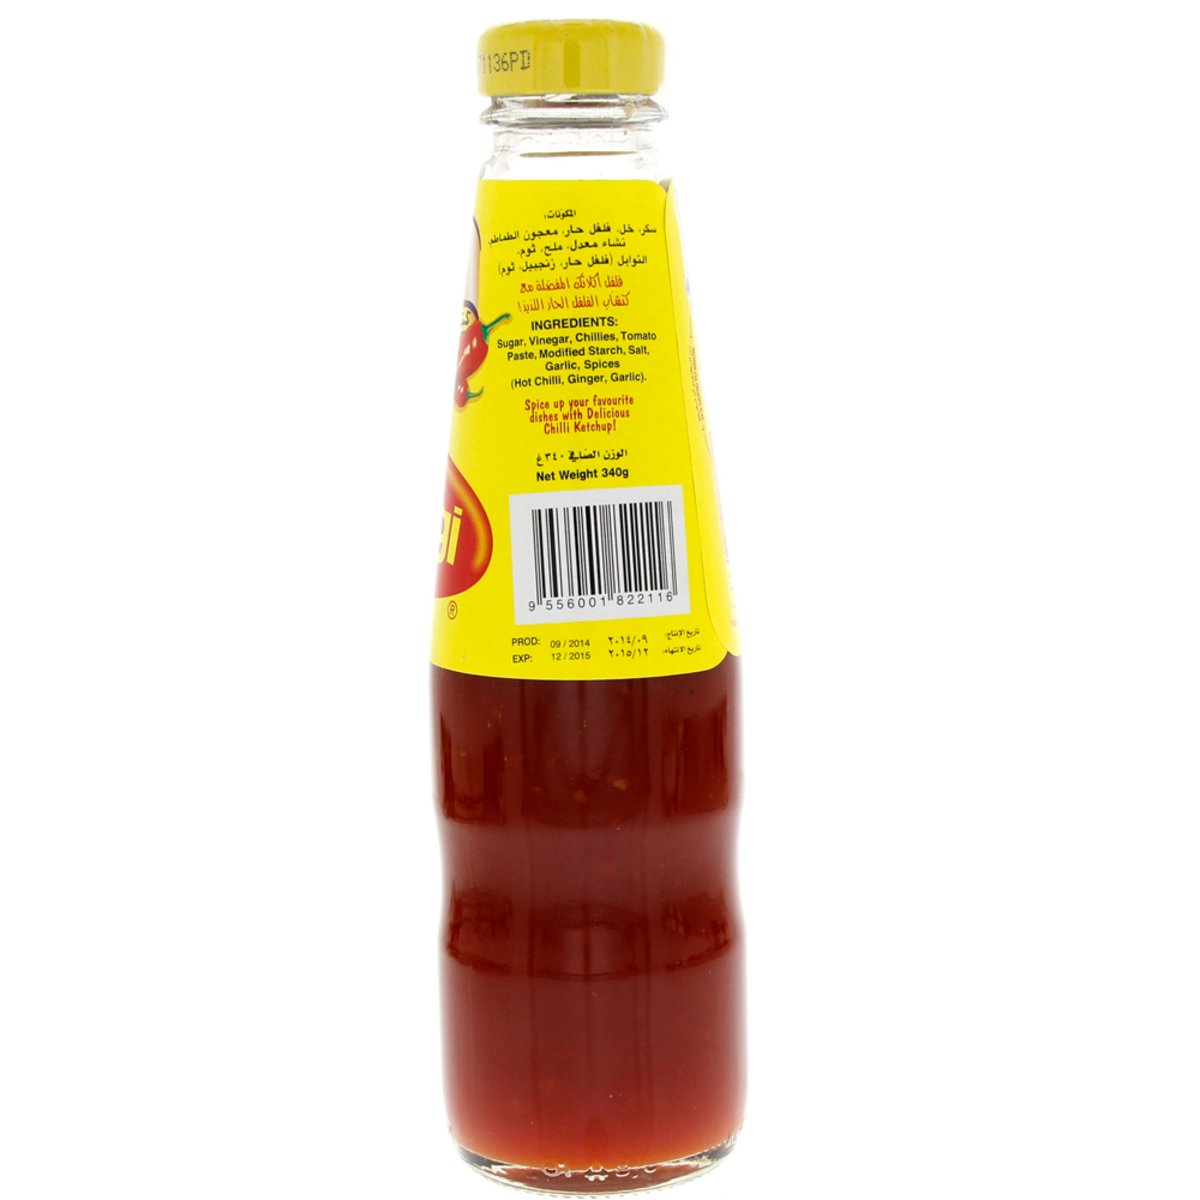 Maggi Ketchup Chilli Bottle 340 g